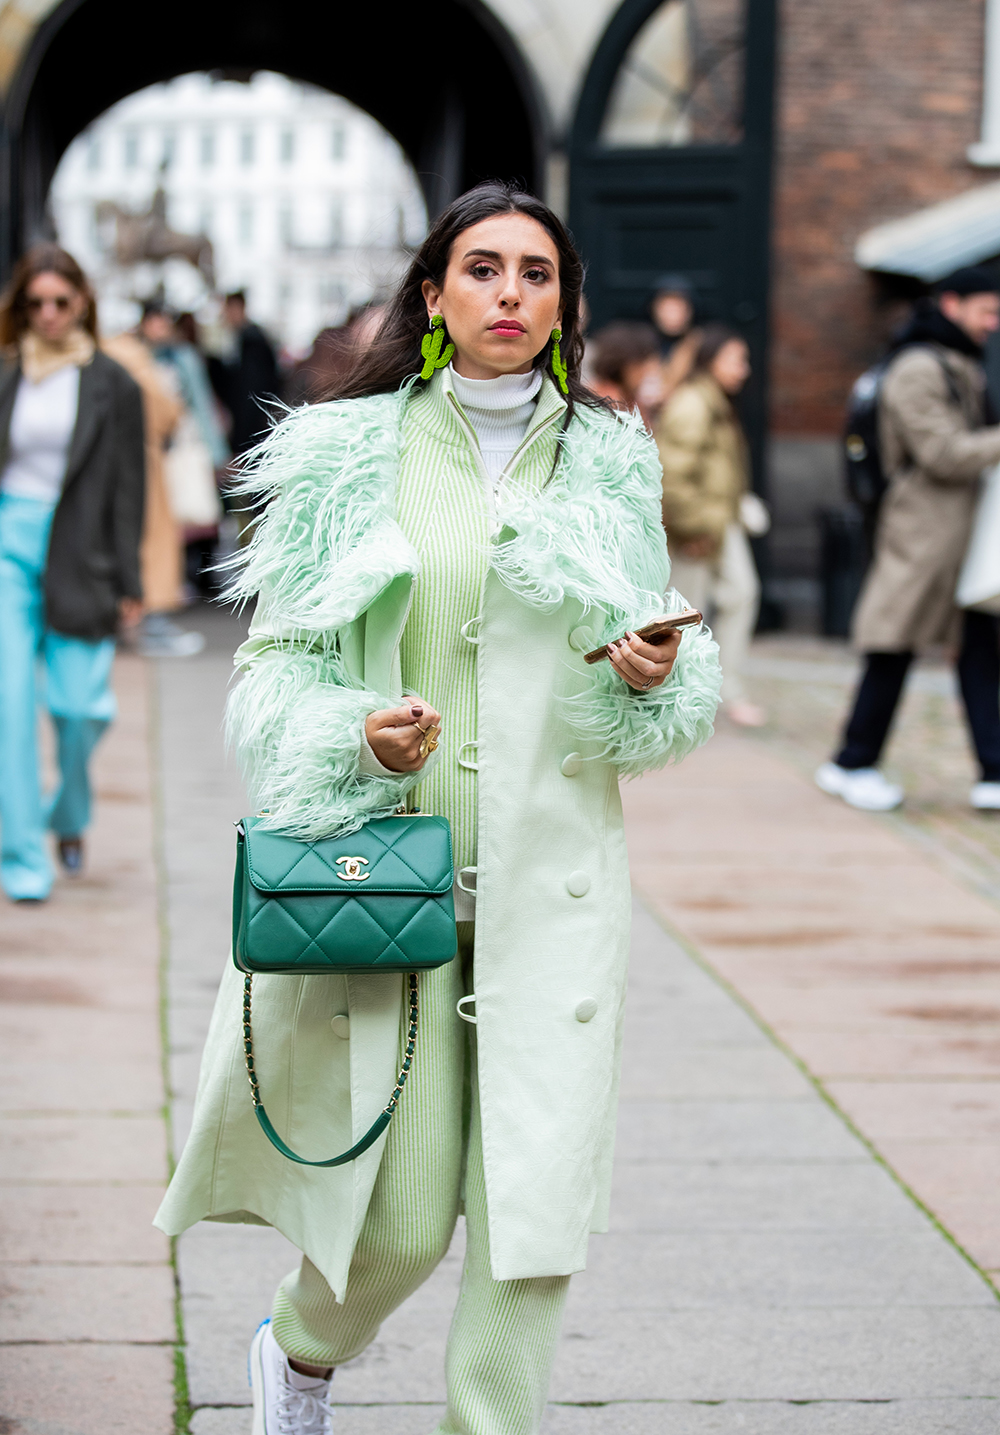 COPENHAGEN, DENMARK - JANUARY 29: A guest is seen wearing green Chanel bag, coat and pants outside Mfpen during Copenhagen Fashion Week Autumn/Winter 2020 Day 2 on January 29, 2020 in Copenhagen, Denmark. (Photo by Christian Vierig/Getty Images)